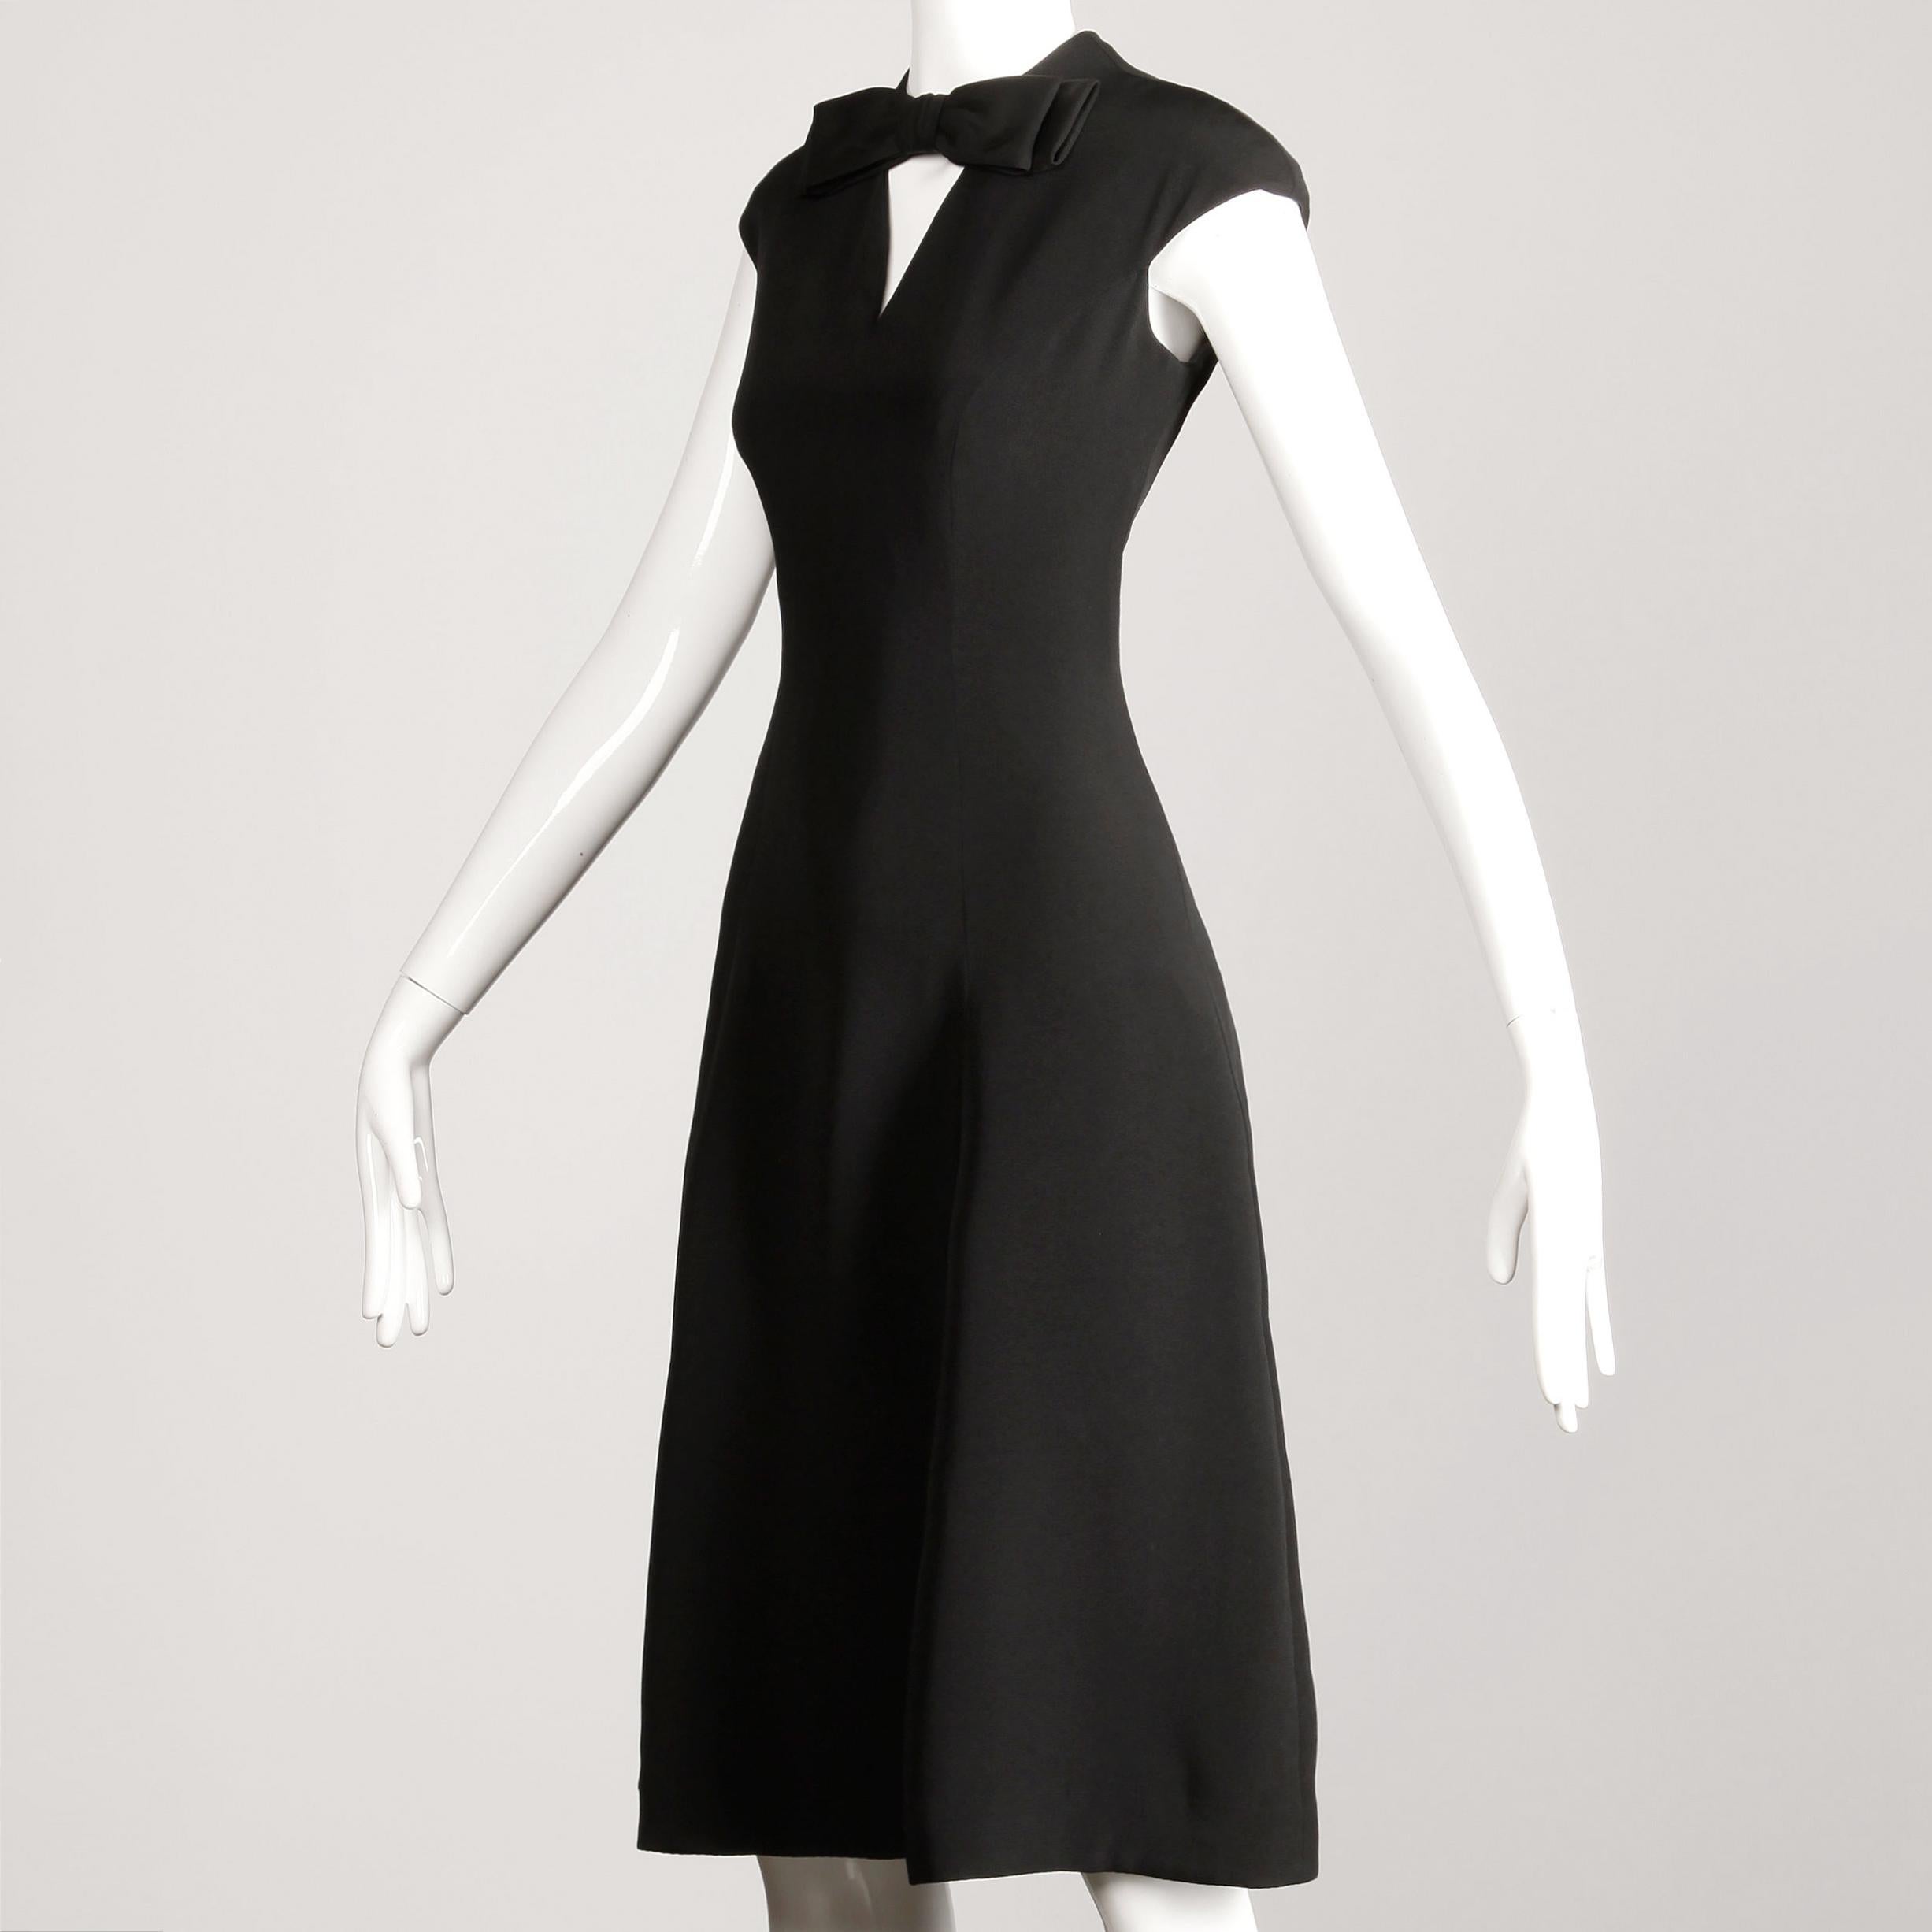 adele black dress designer